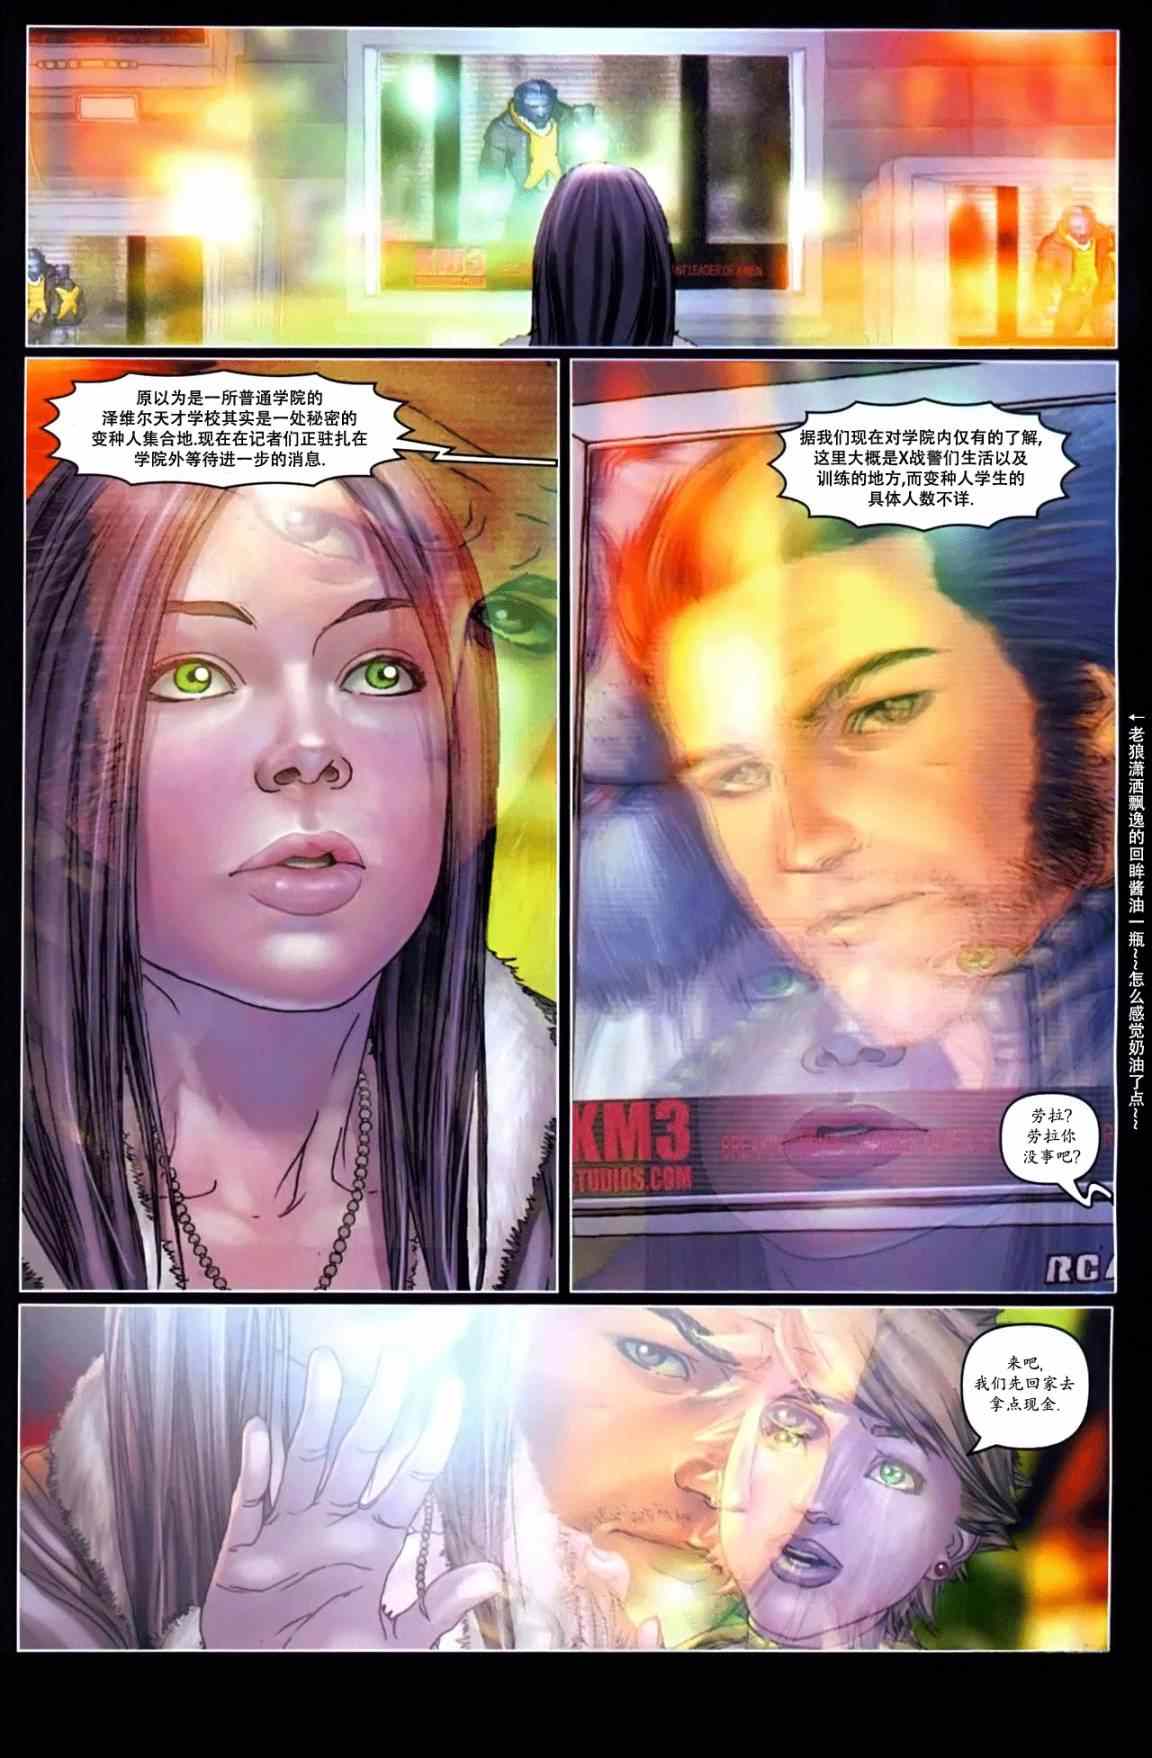 《X-23目标X》漫画 003卷